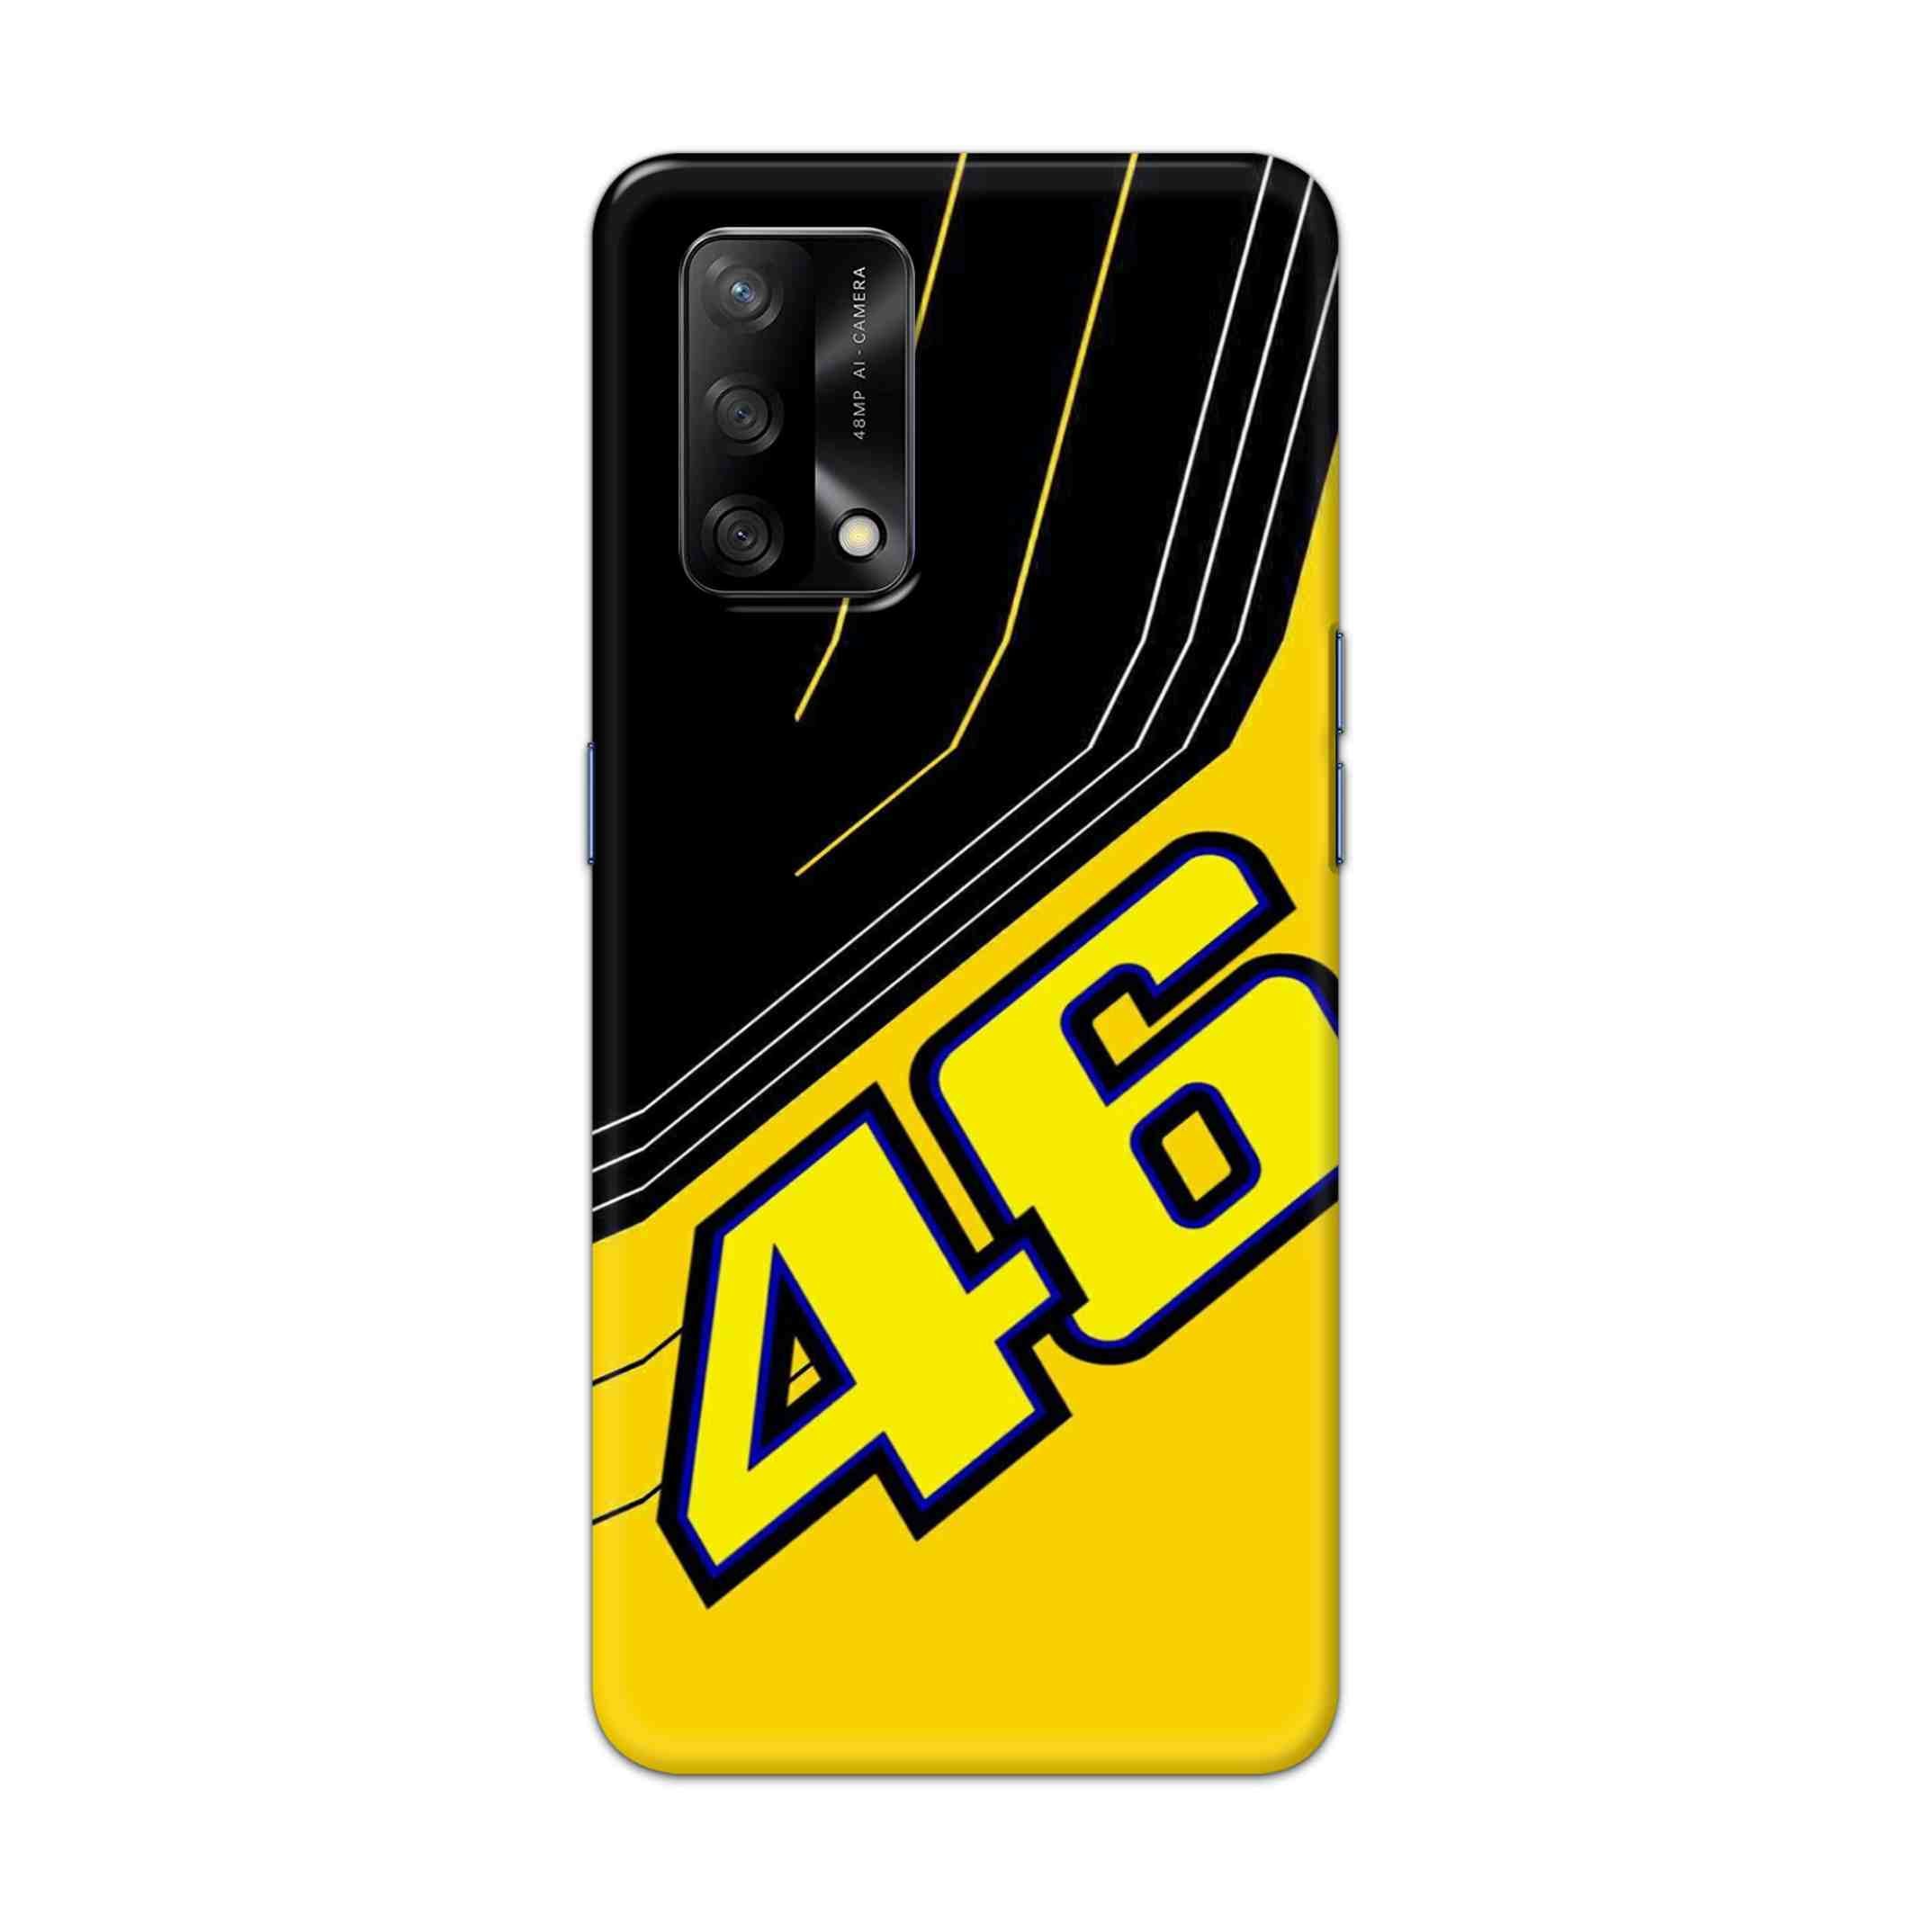 Buy 46 Hard Back Mobile Phone Case Cover For Oppo F19 Online